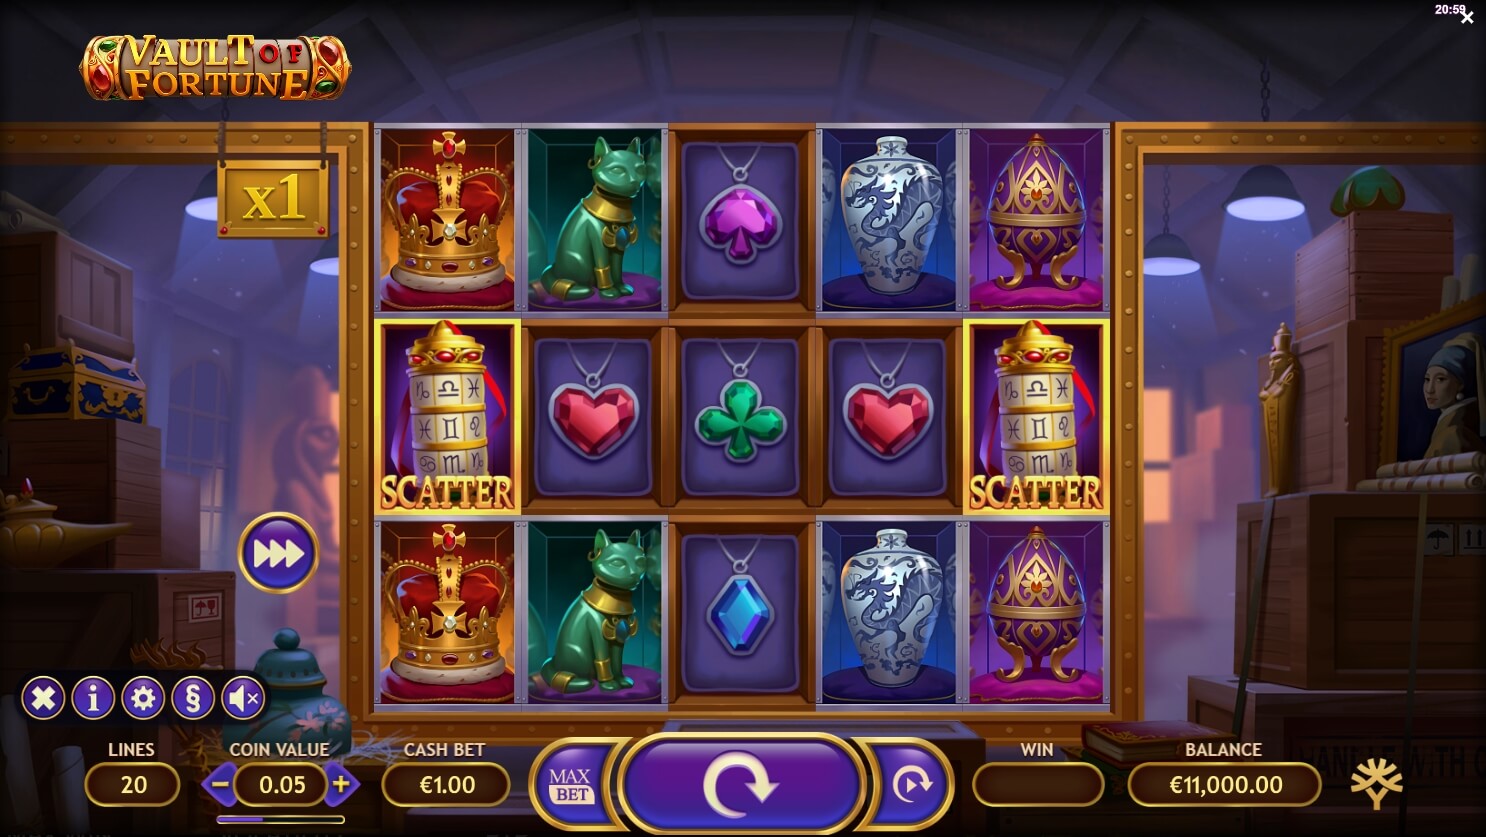 Vault of Fortune joker gaming